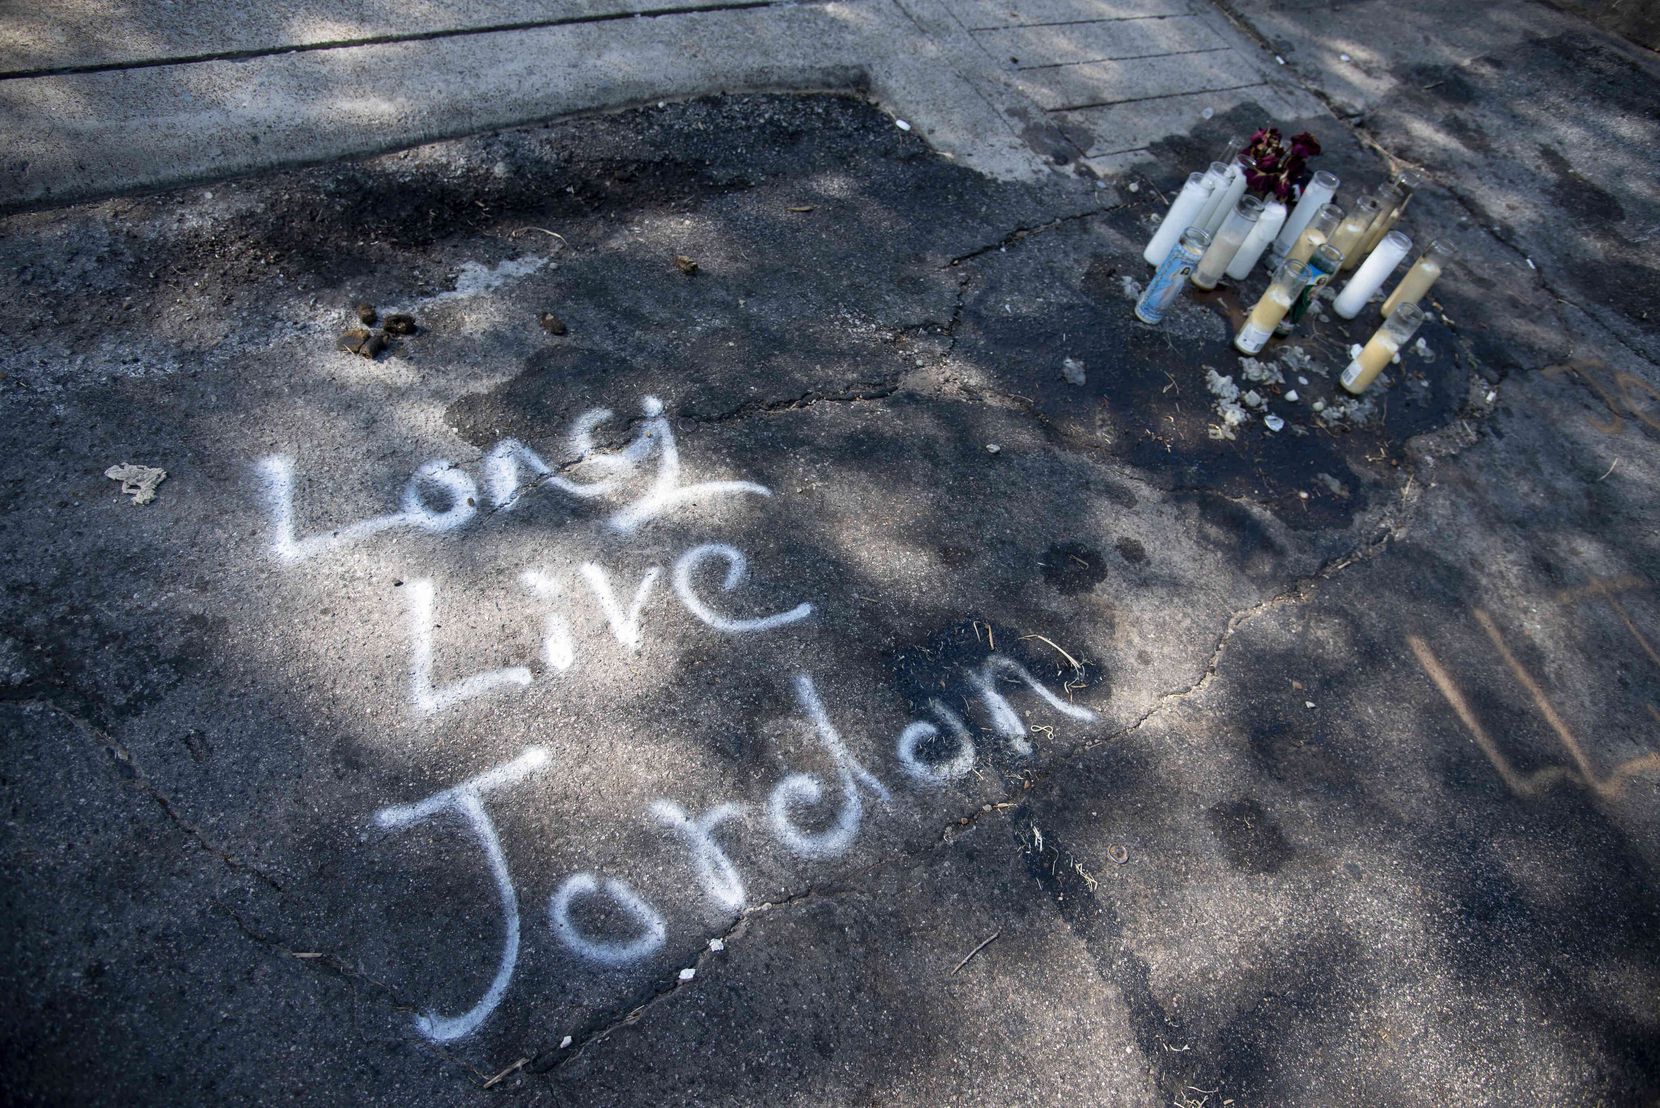 “Long Live Jordan” is written on the ground where Jordan Perez, 14, was struck by gunshots...